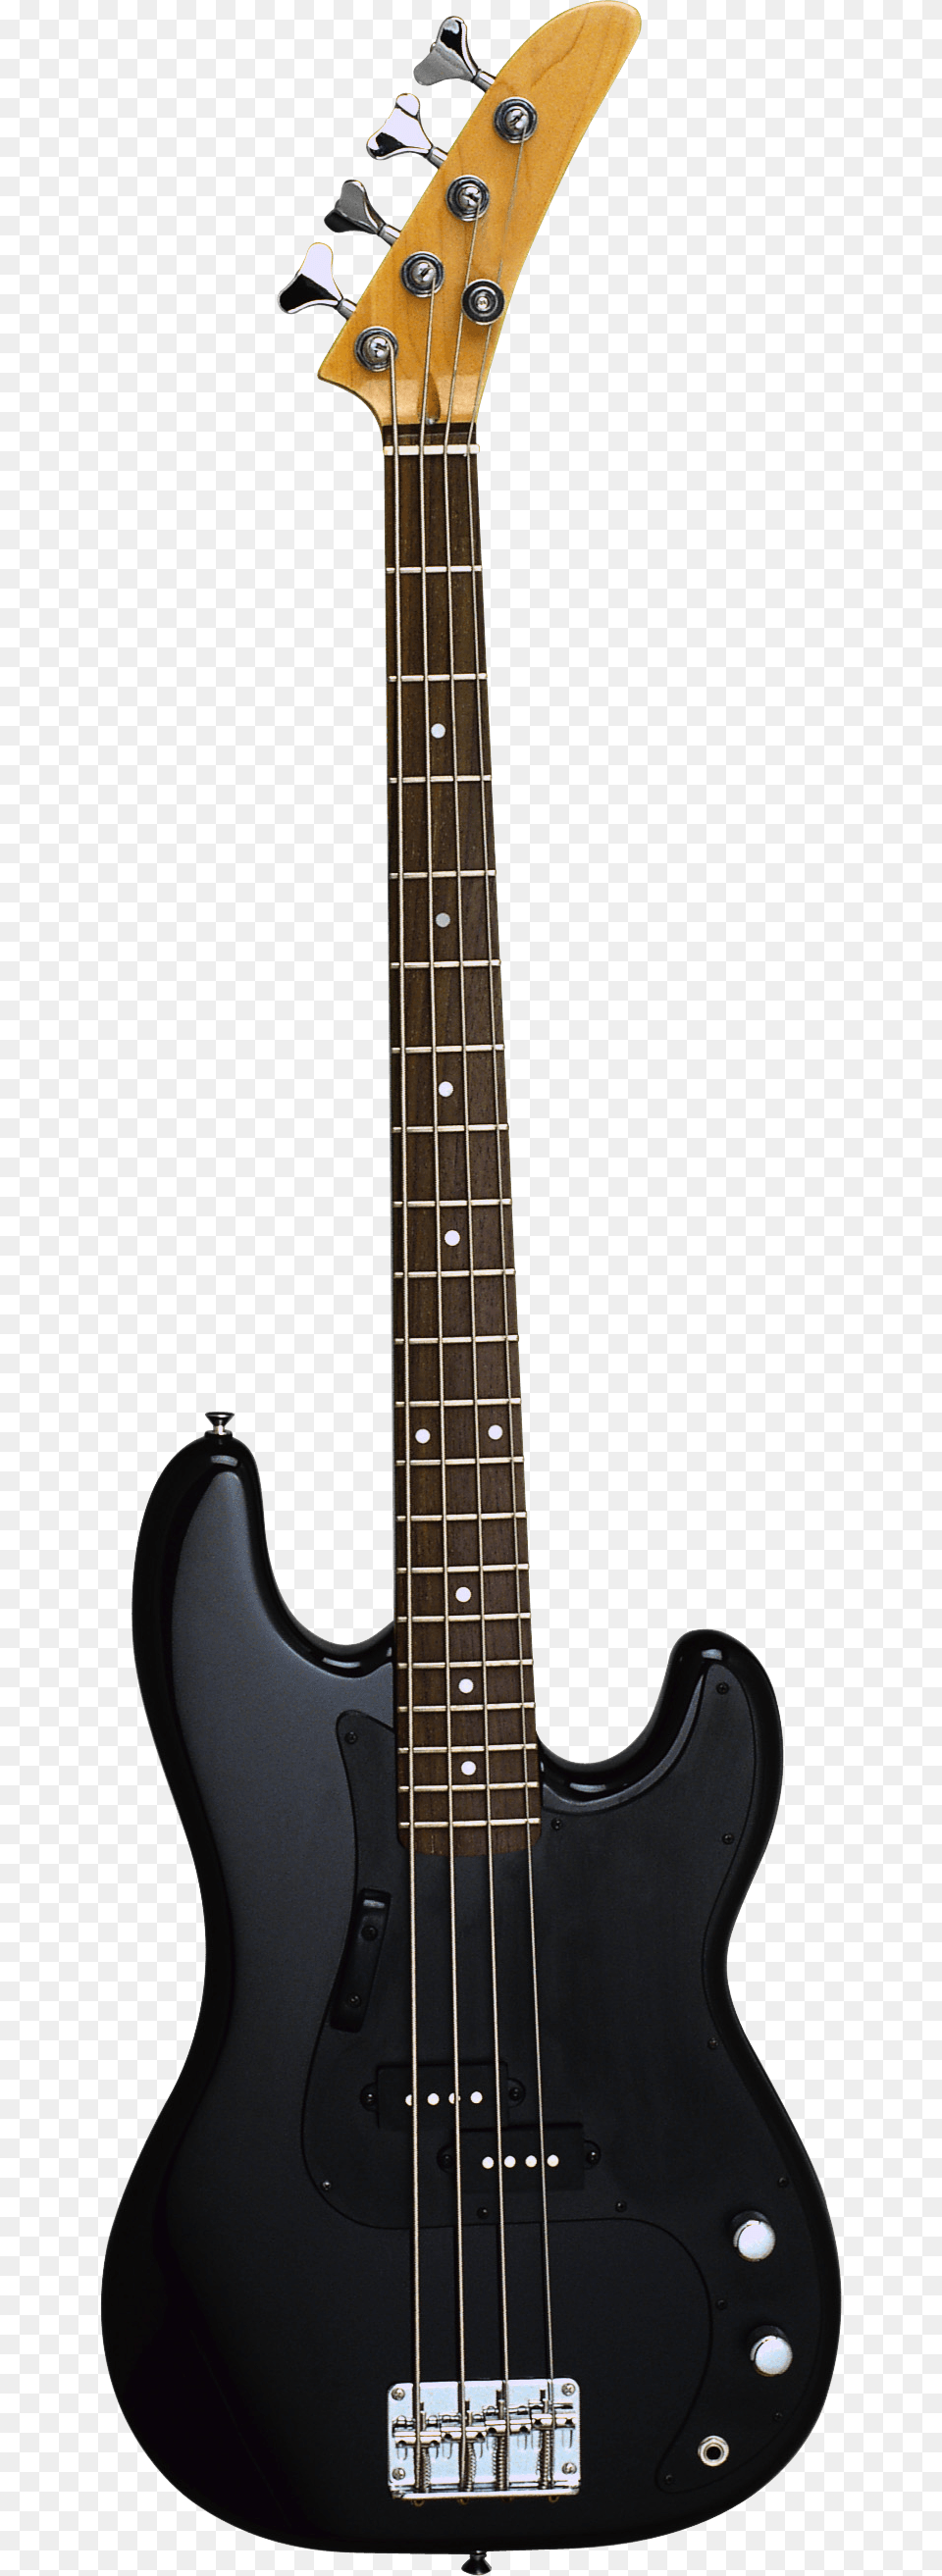 Black Electric Guitar Image, Bass Guitar, Musical Instrument Png